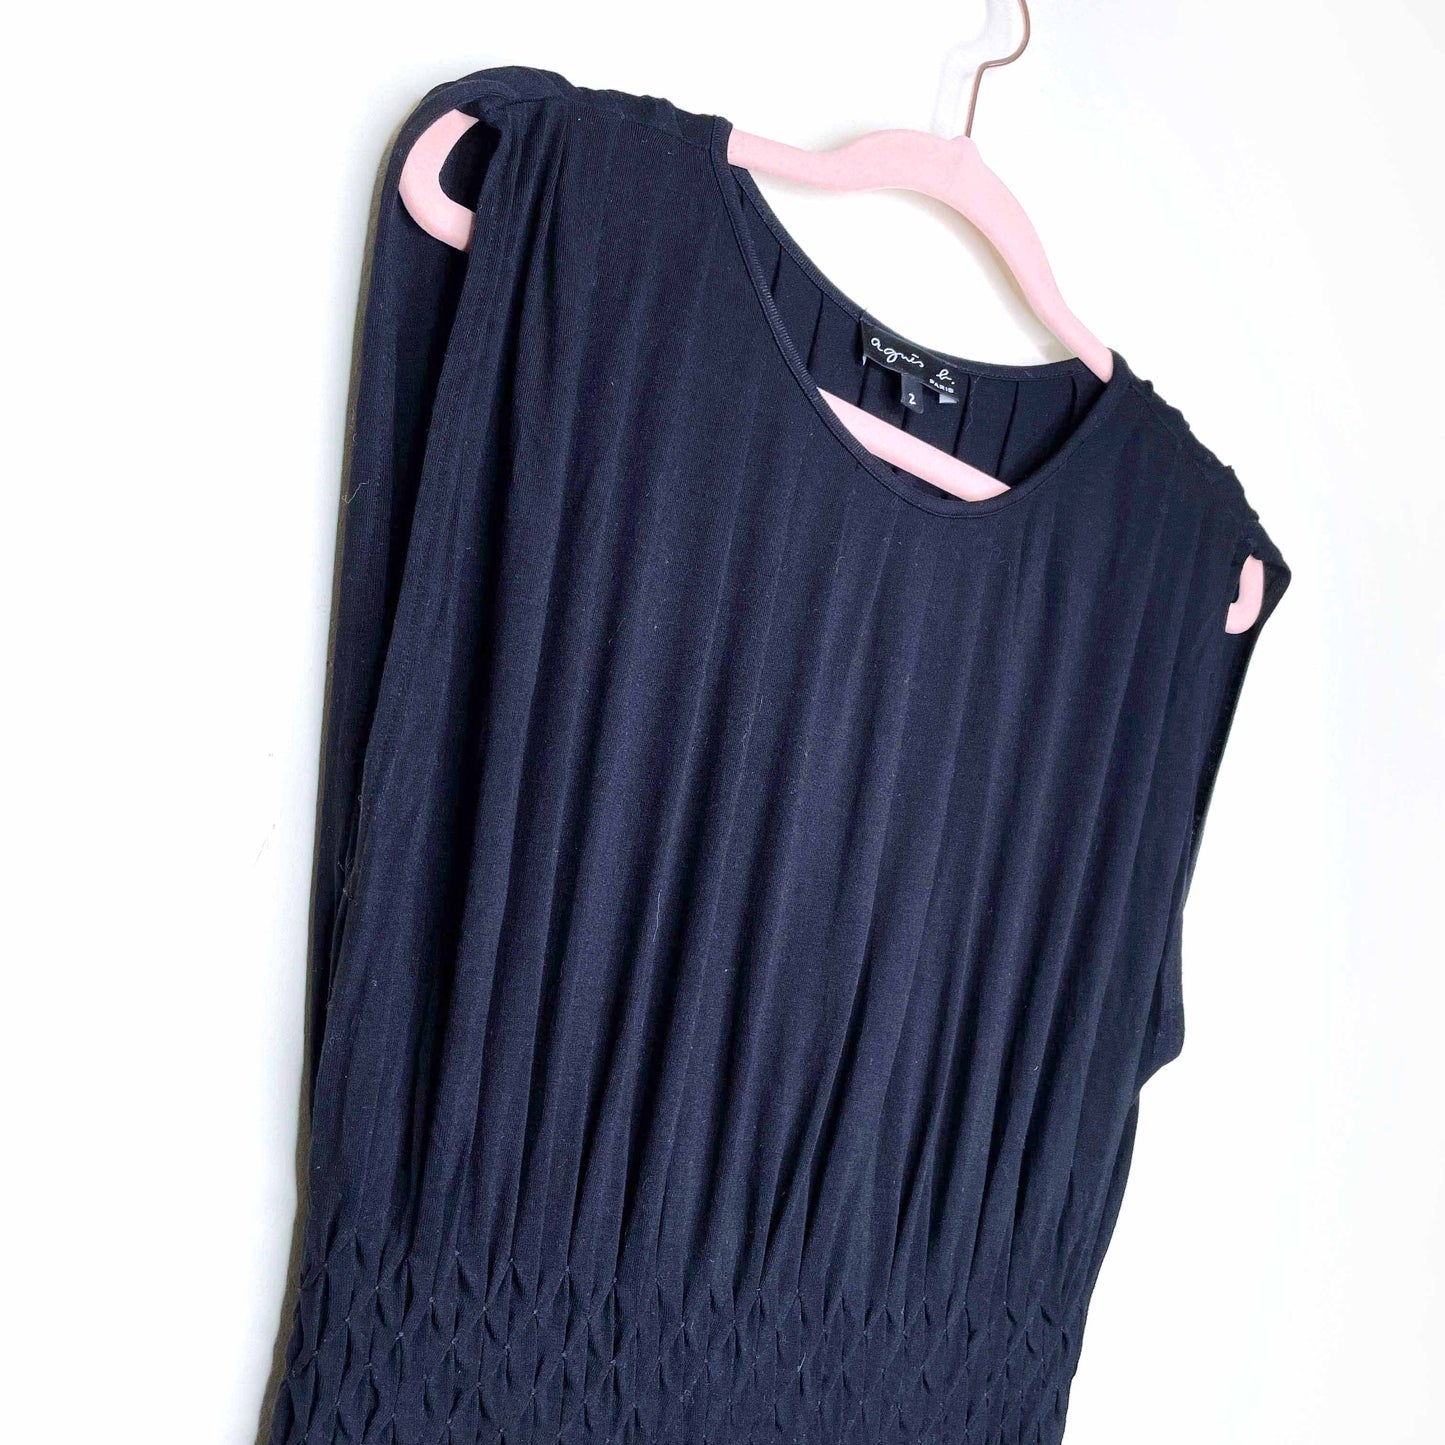 agnes b black smocked waist knit dress - size 2